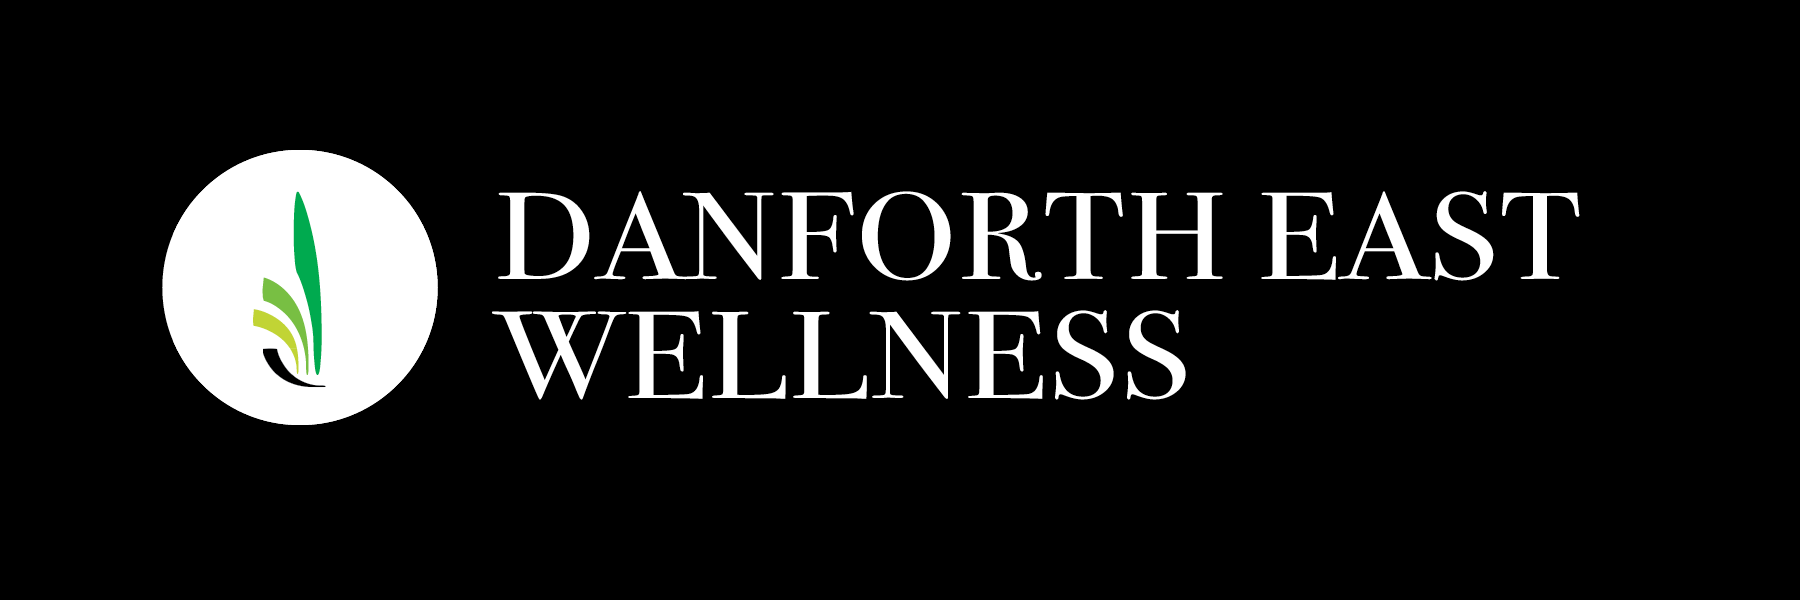 Danforth East Wellness